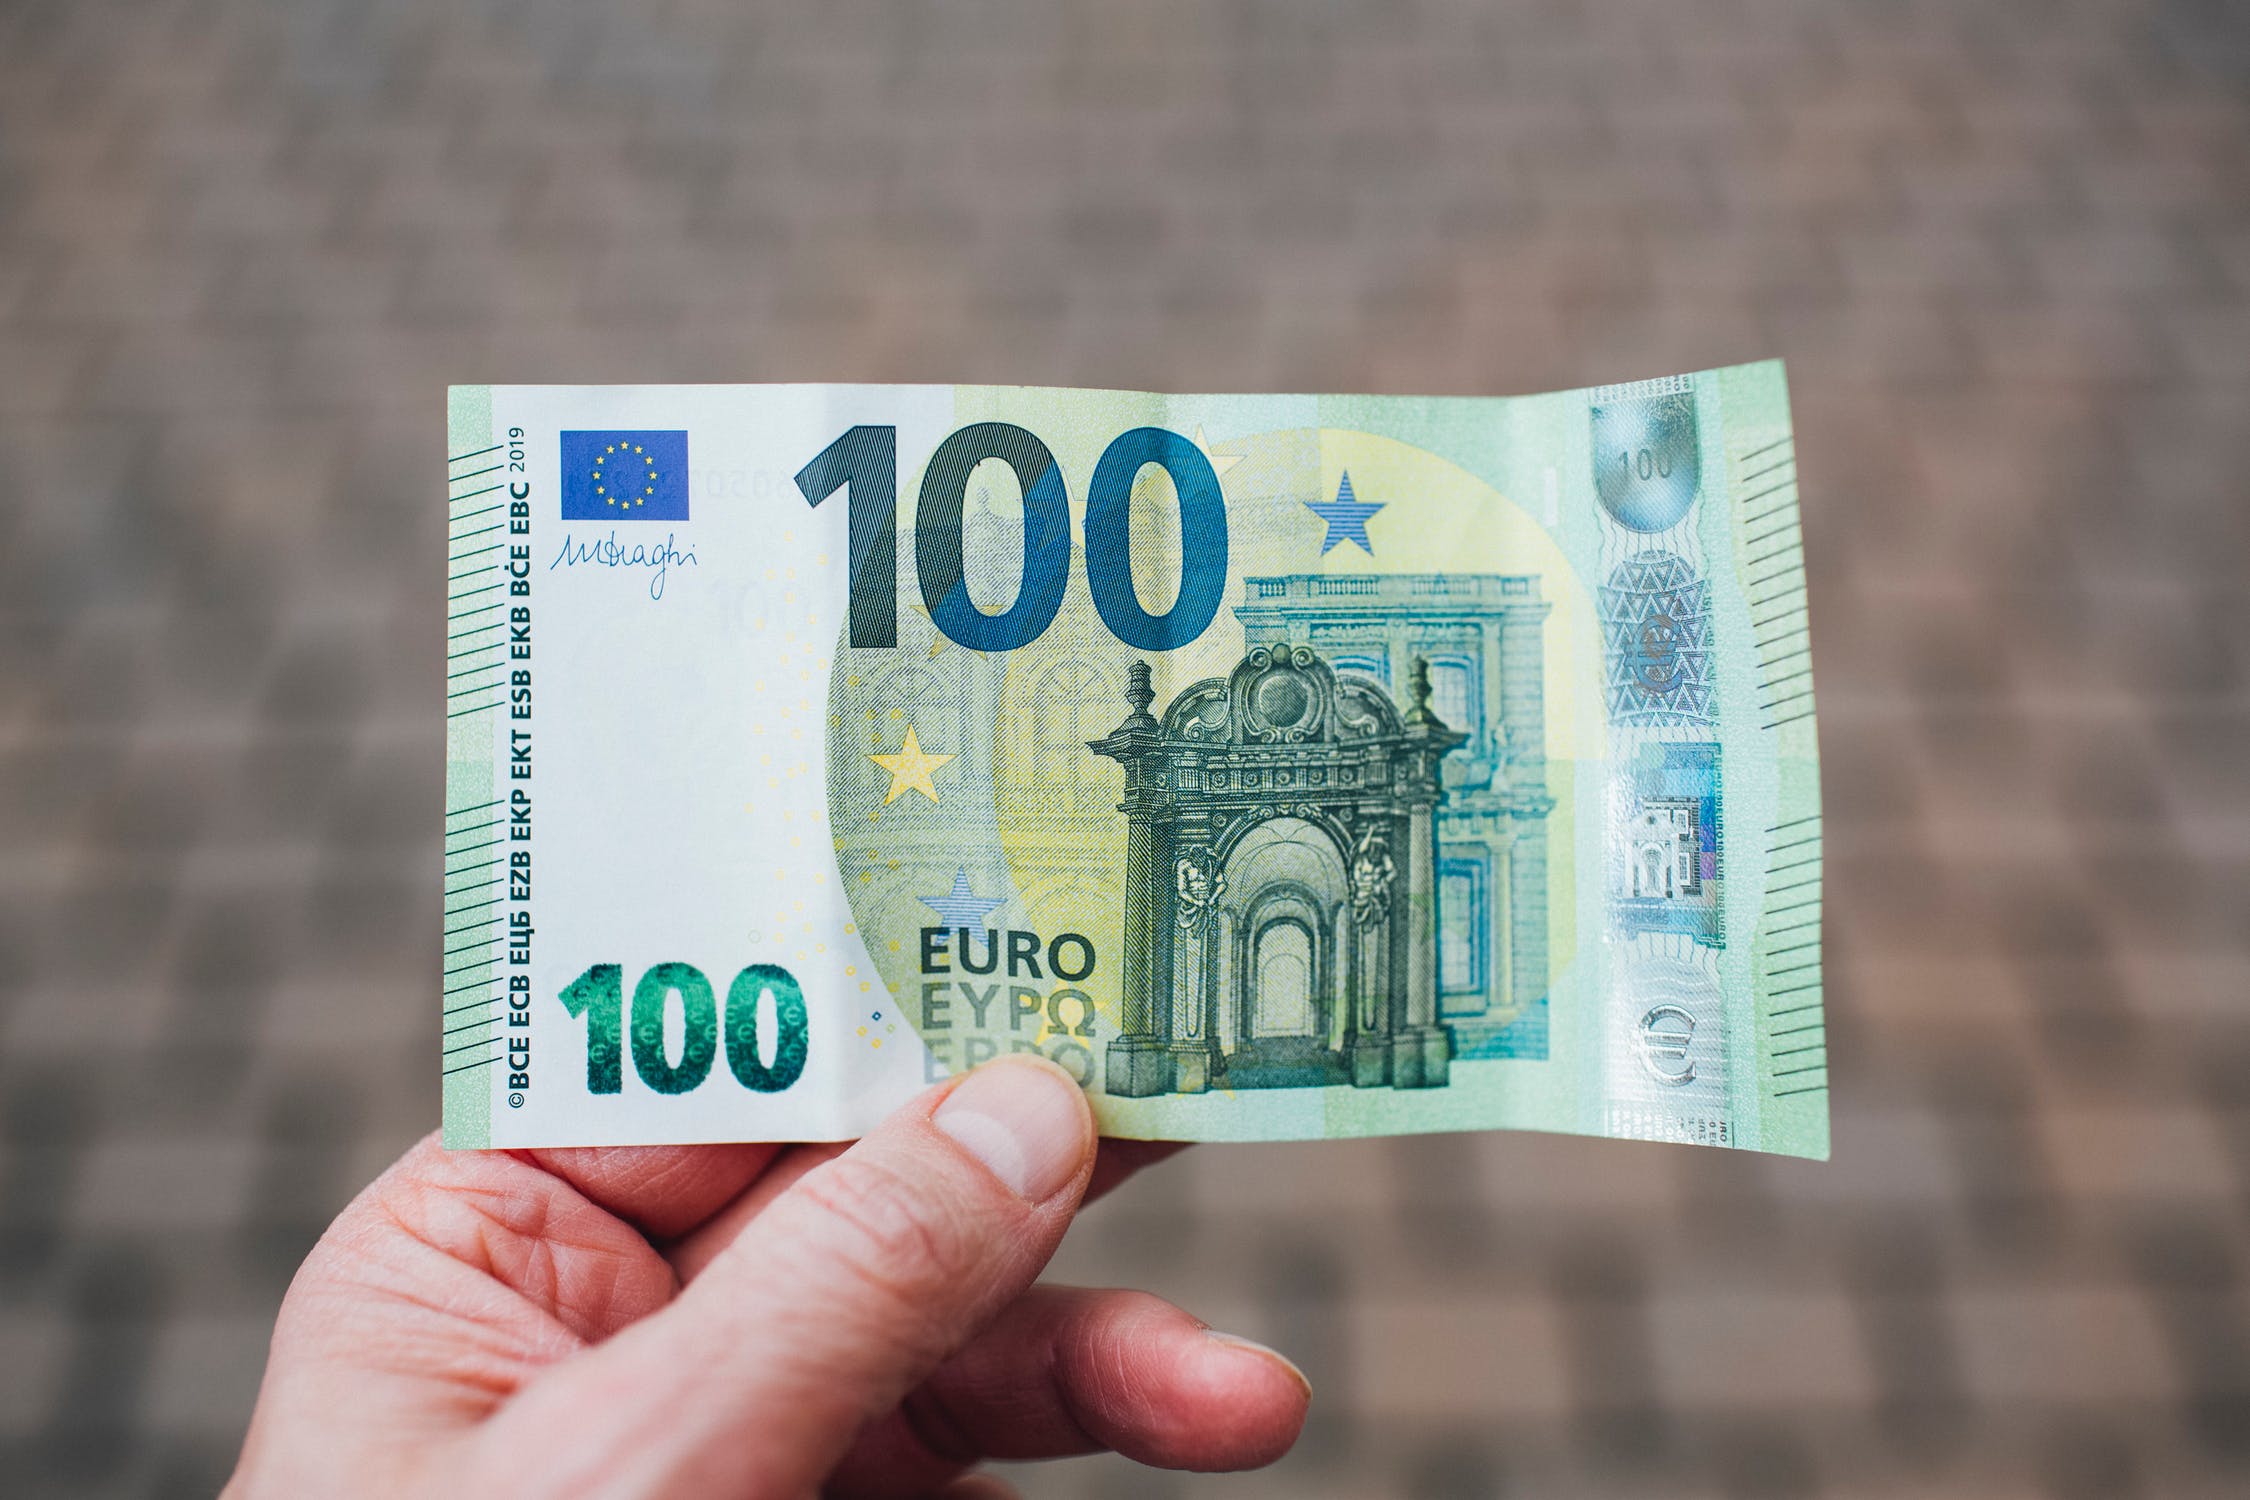 €100 note. Photo: Markus Spiske/Pexels